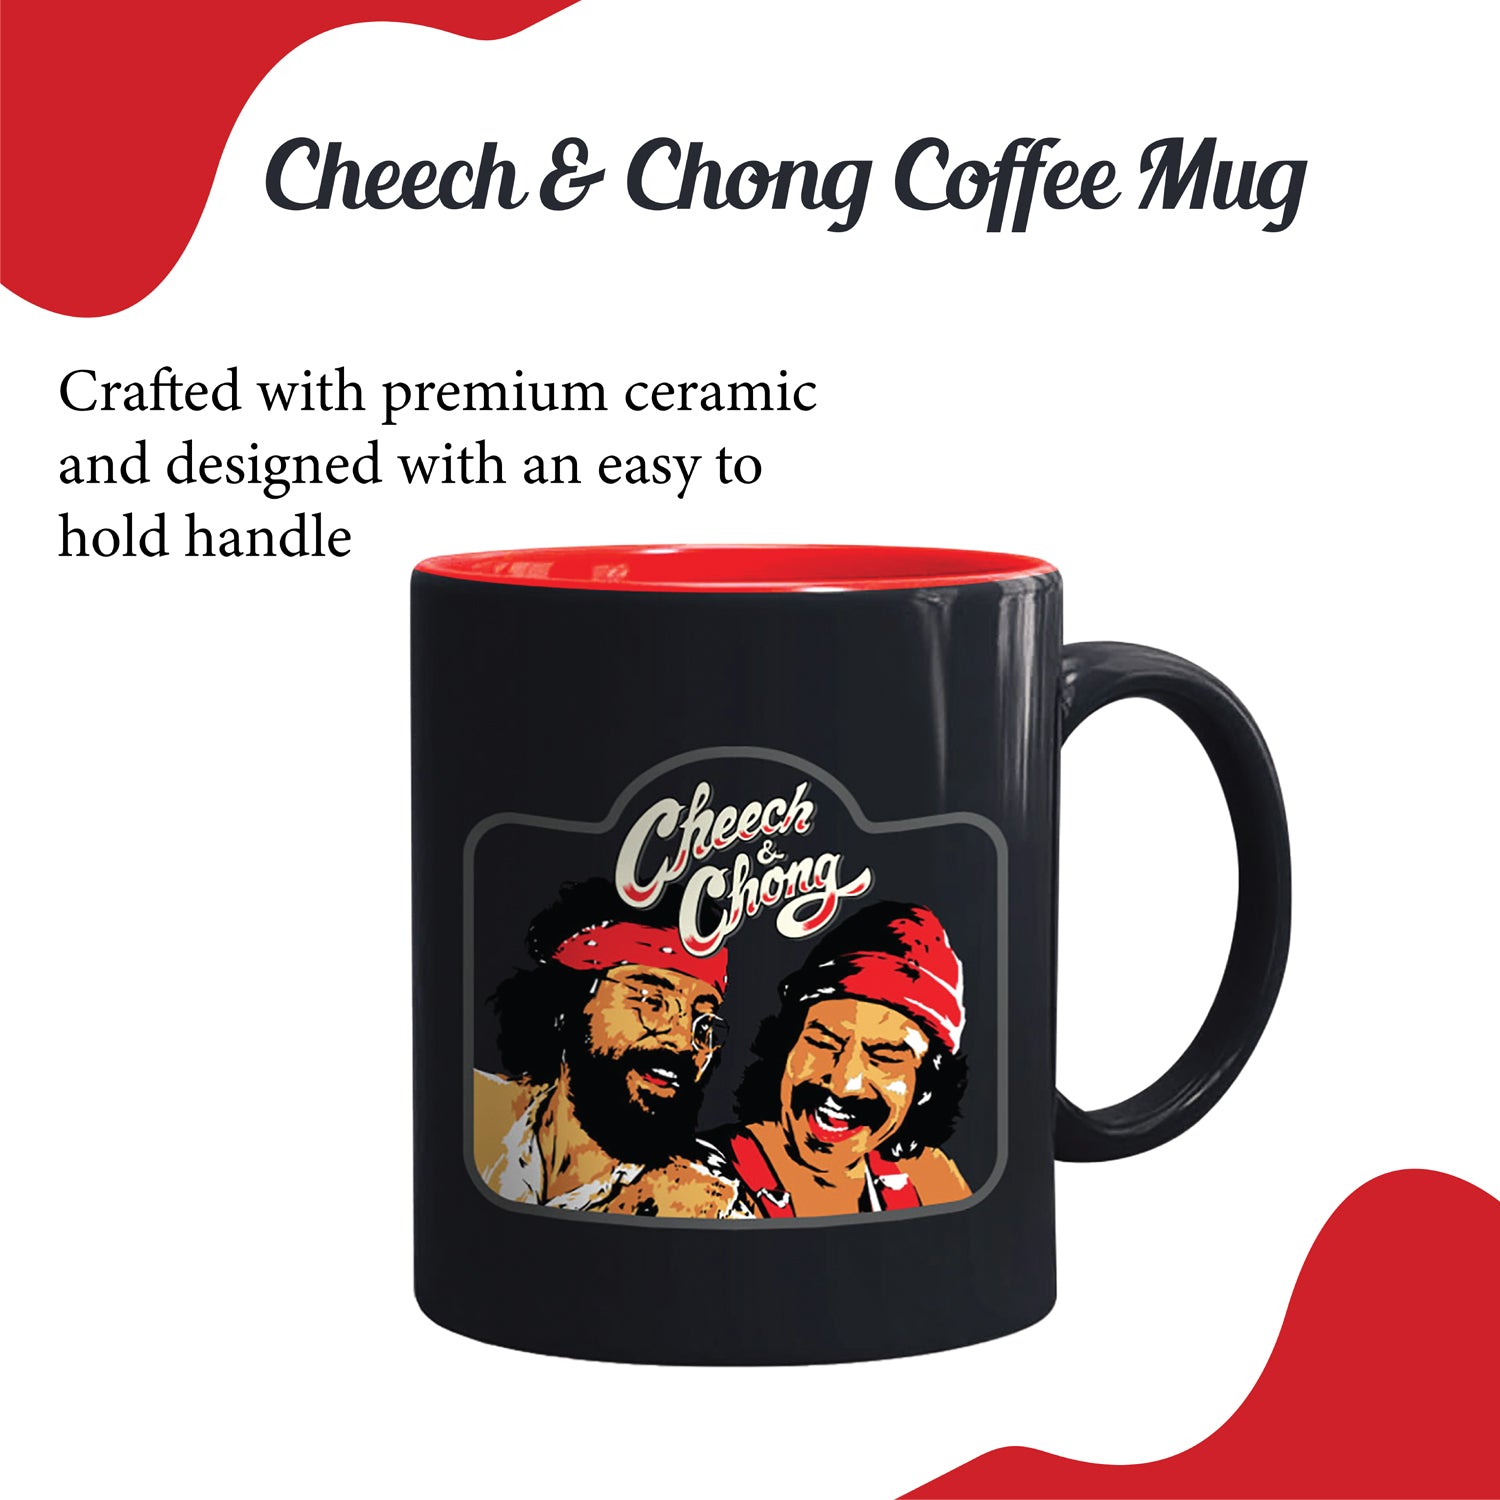 Cheech and Chong Ceramic 2 in 1 Combo Pipe Mug Coffee Mug Coffee Cup